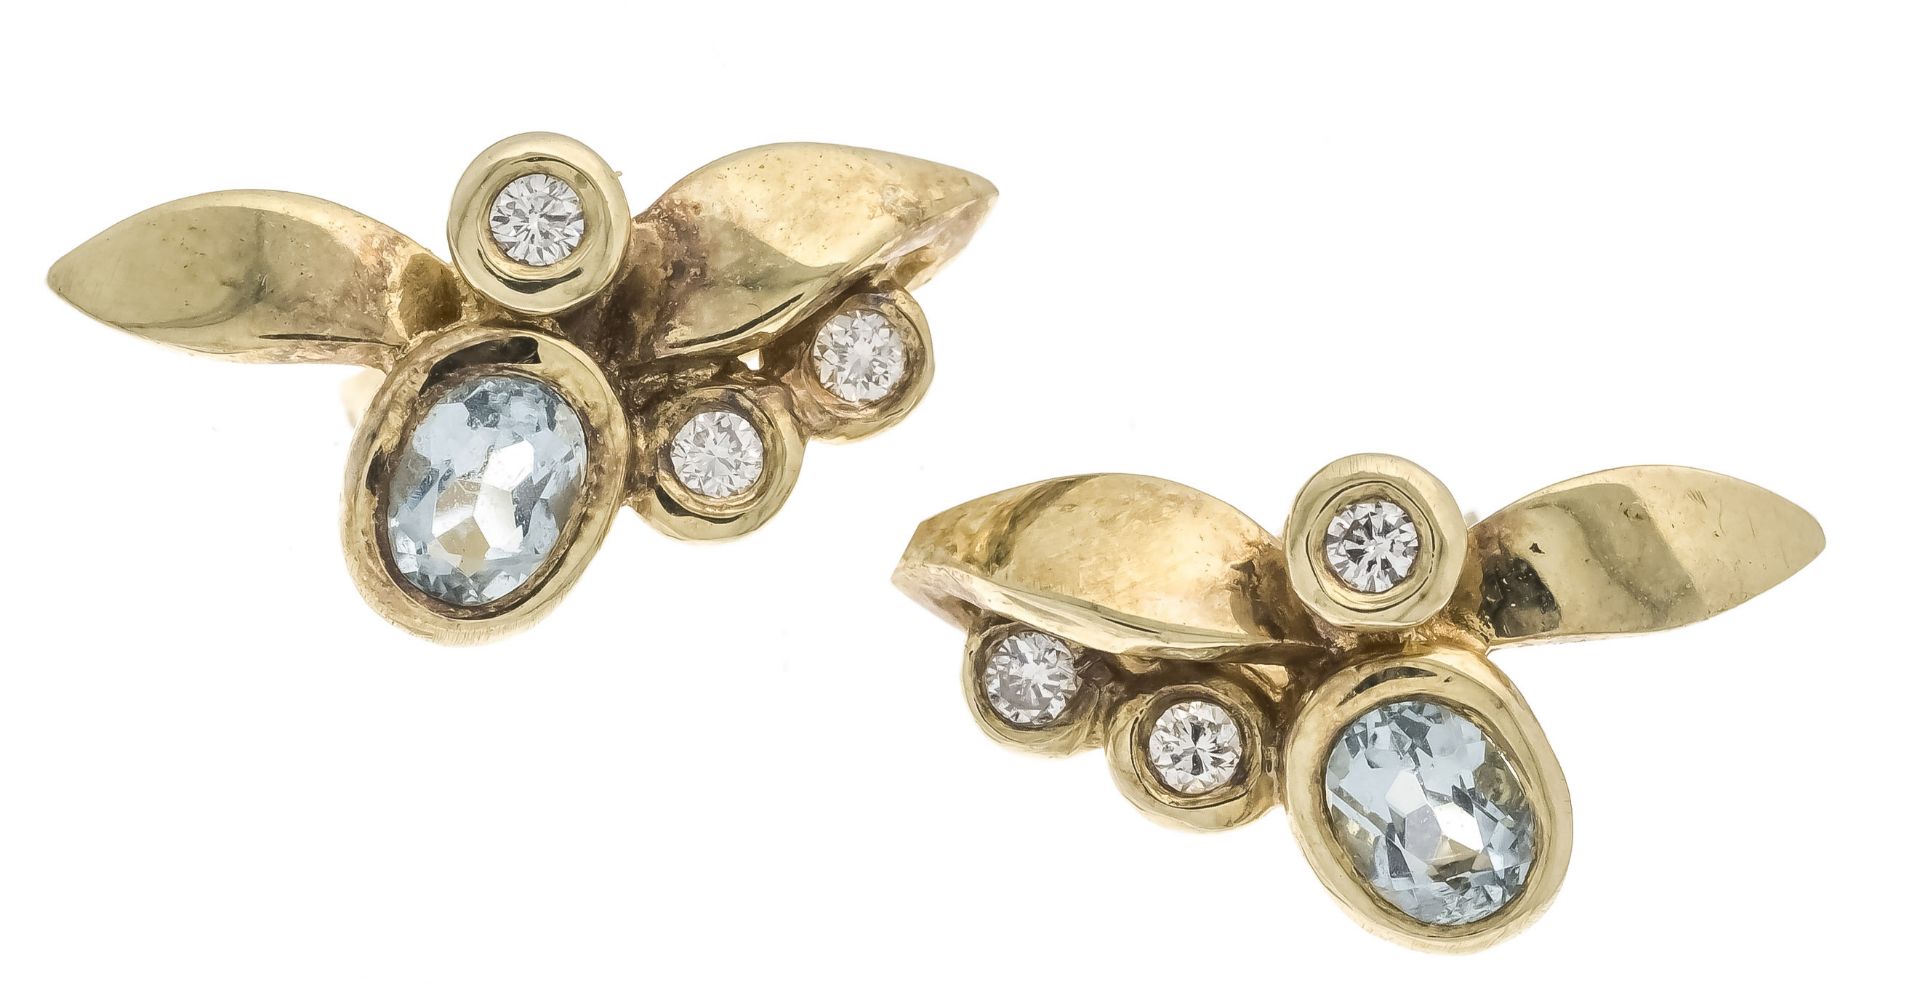 Aquamarine diamond stud earrings GG 585/000 with 2 oval faceted aquamarines 4.6 x 3.3 mm light blue,